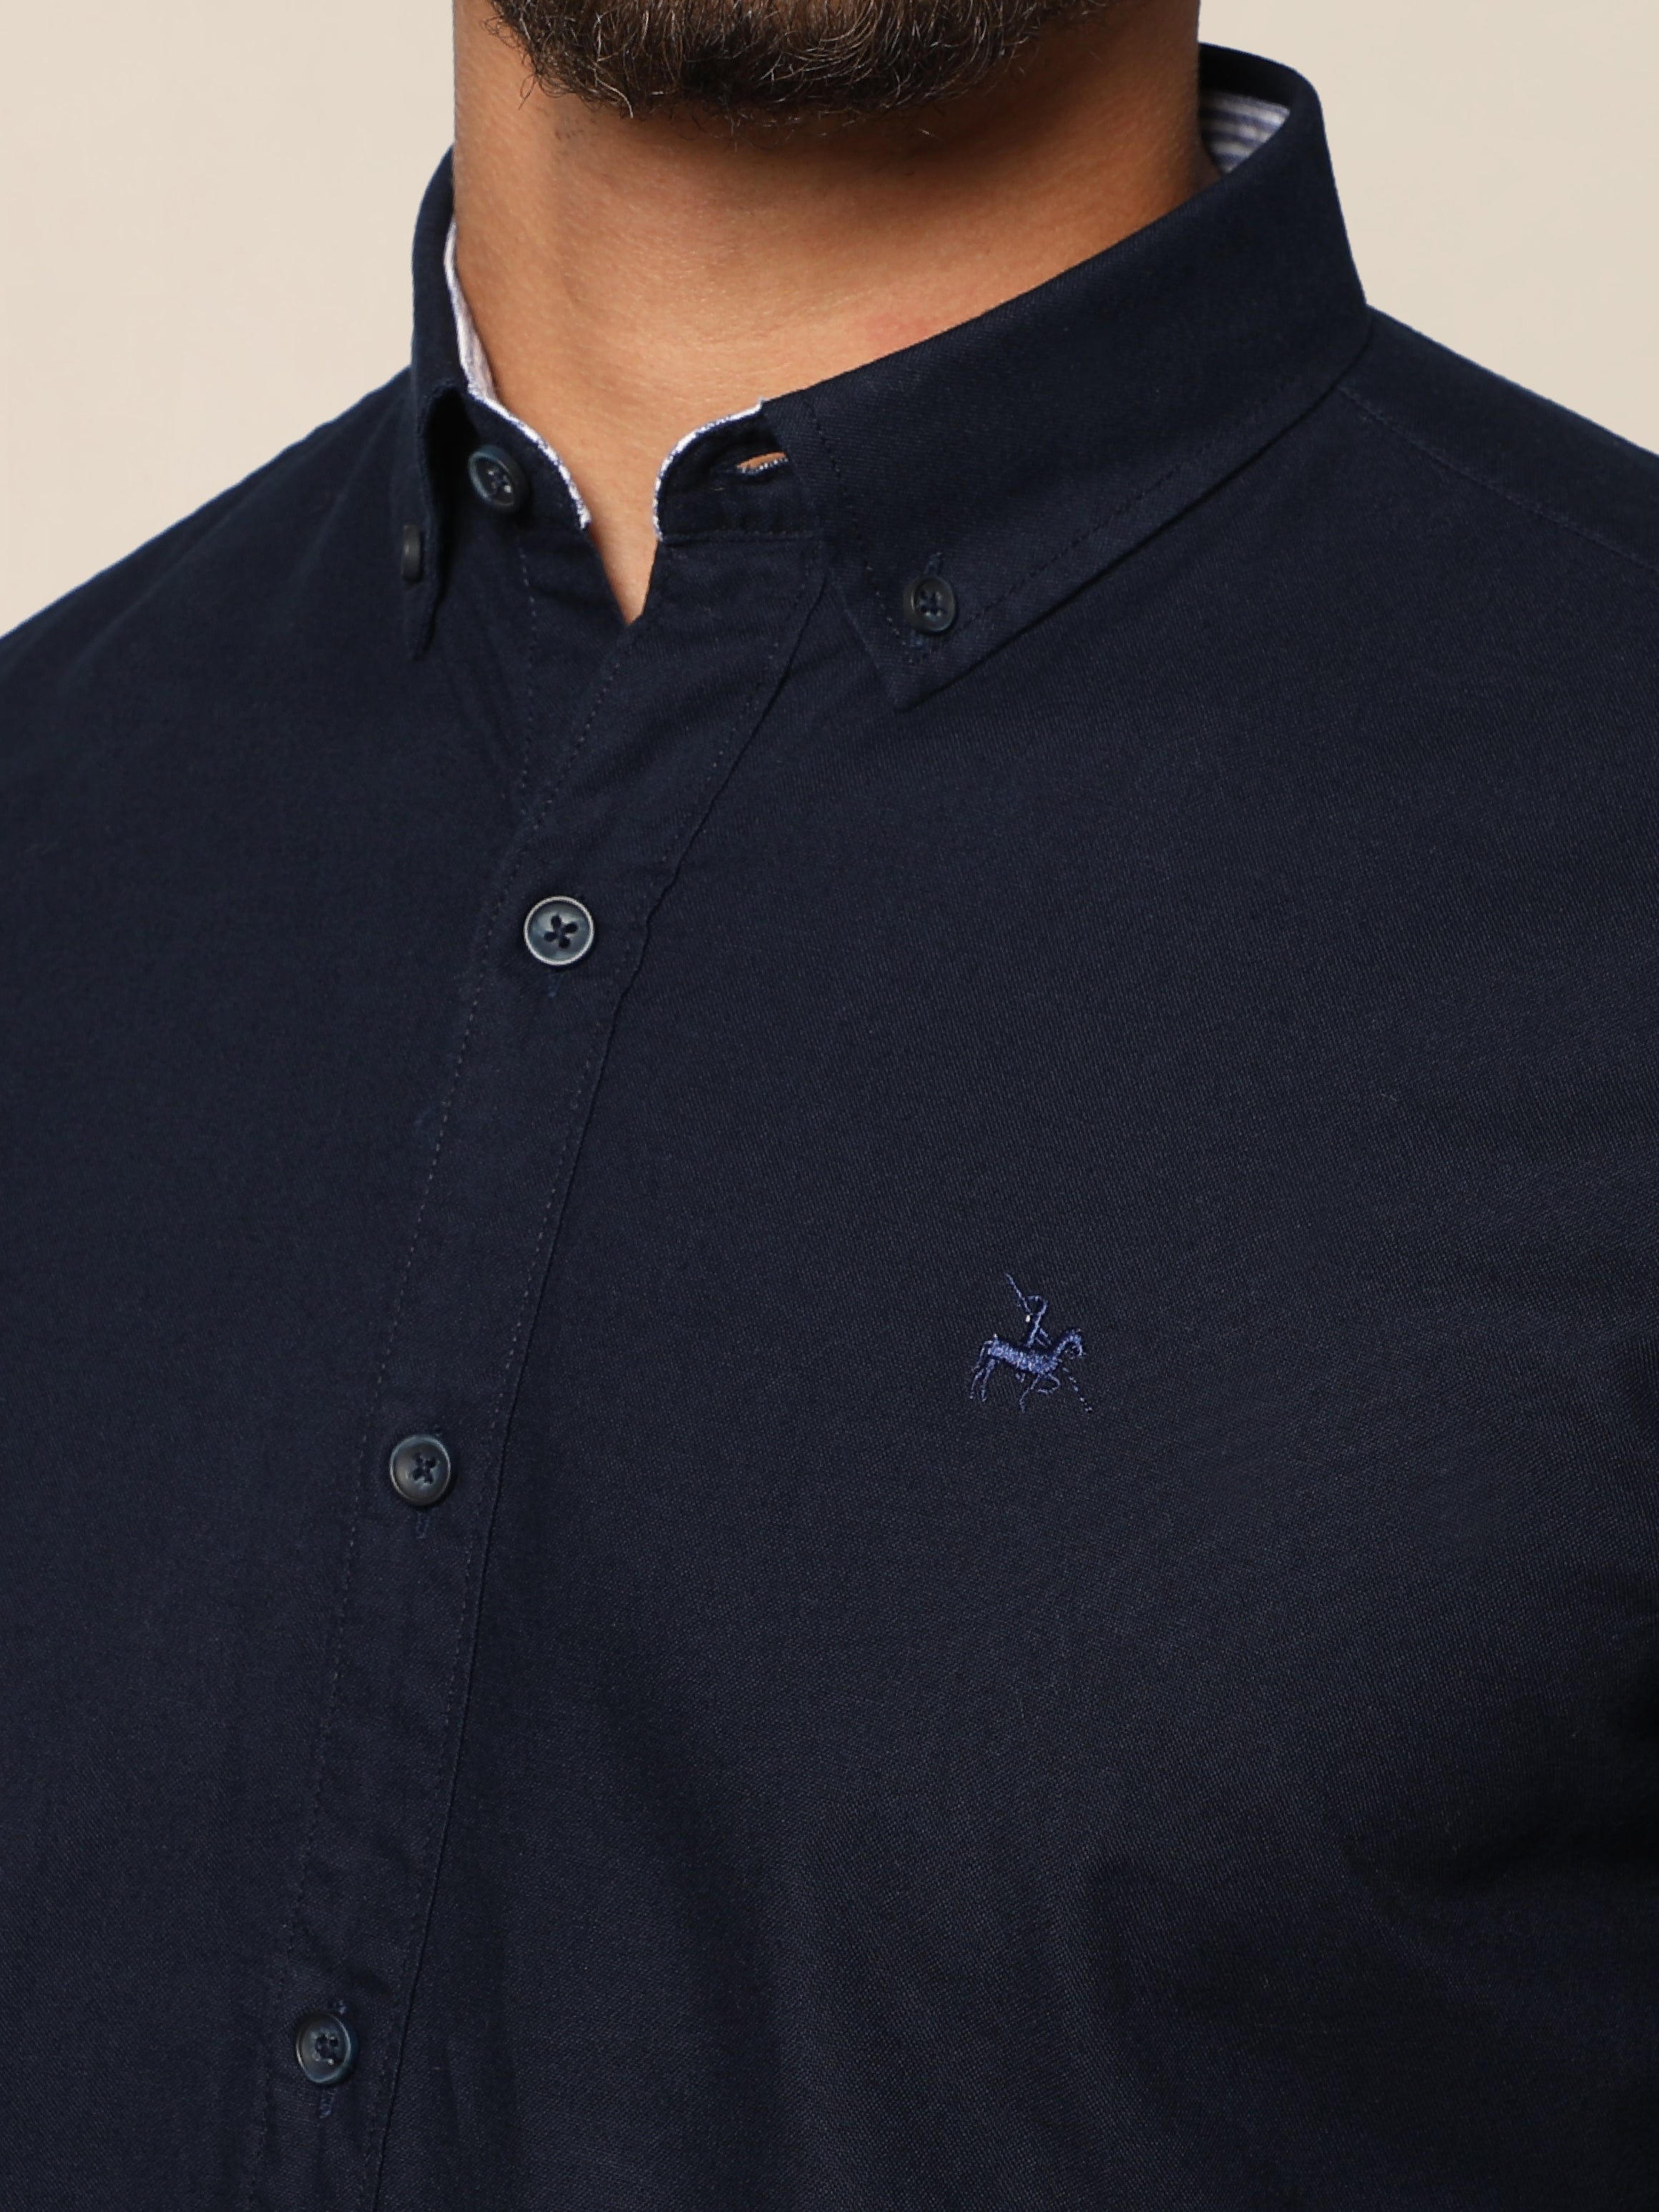 Men Navy Oxford Shirt With Chest Contrast Emblem Design